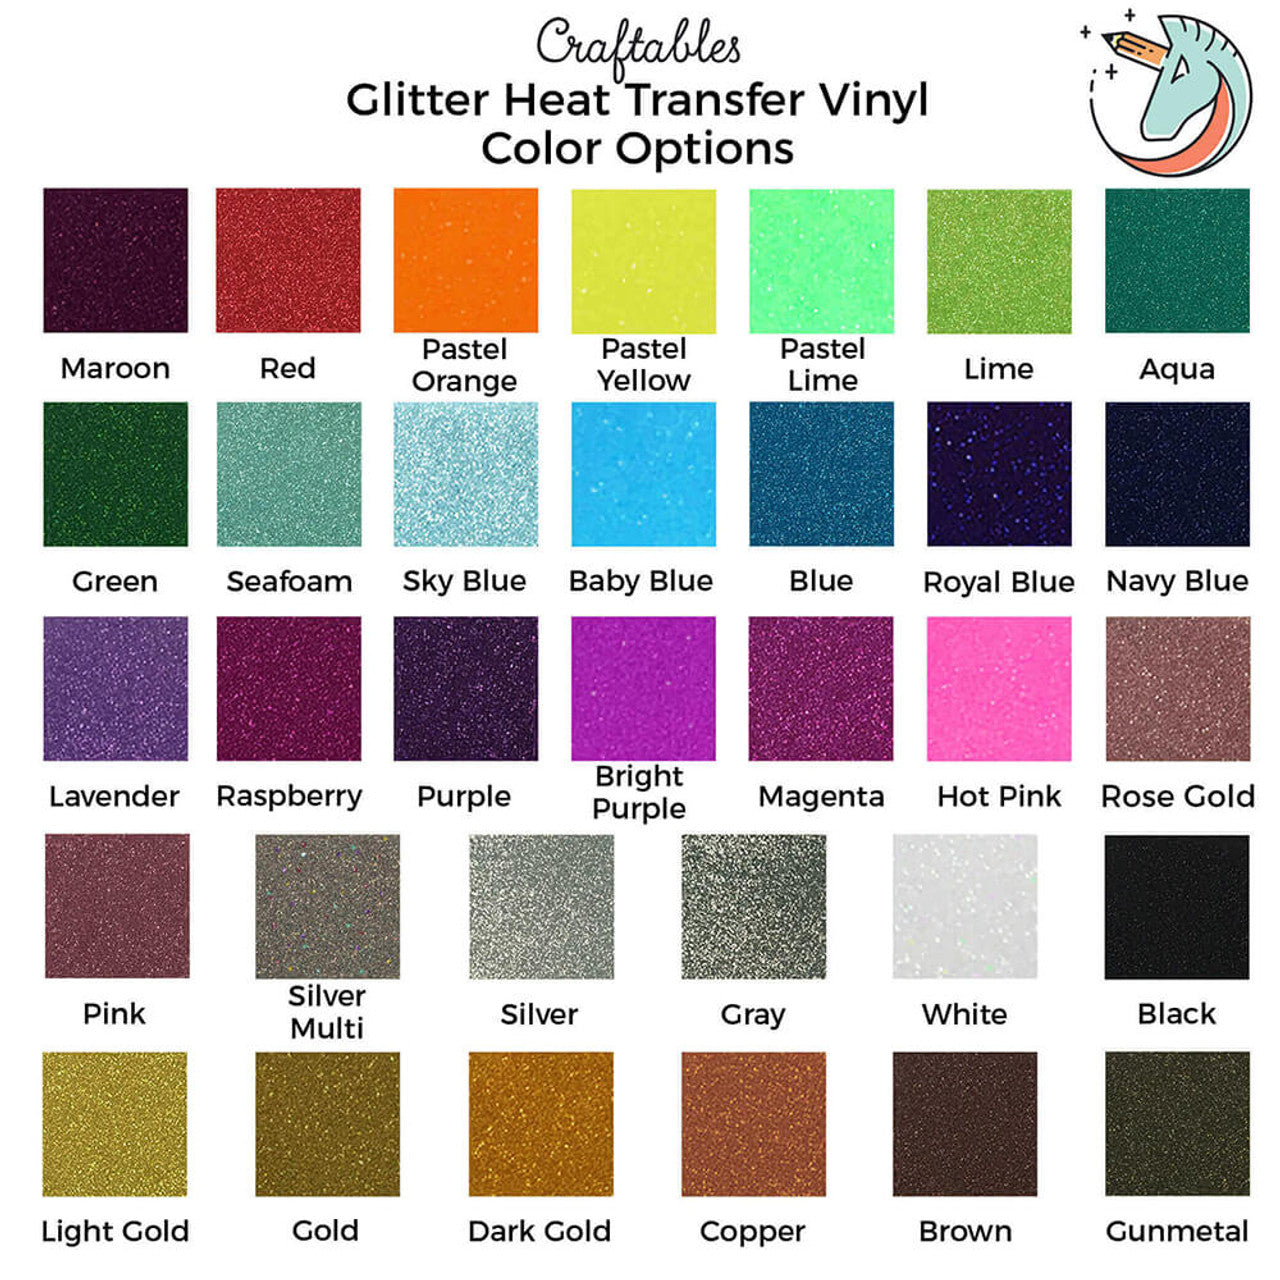 Royal Blue Glitter Heat Transfer Vinyl Sheets By Craftables